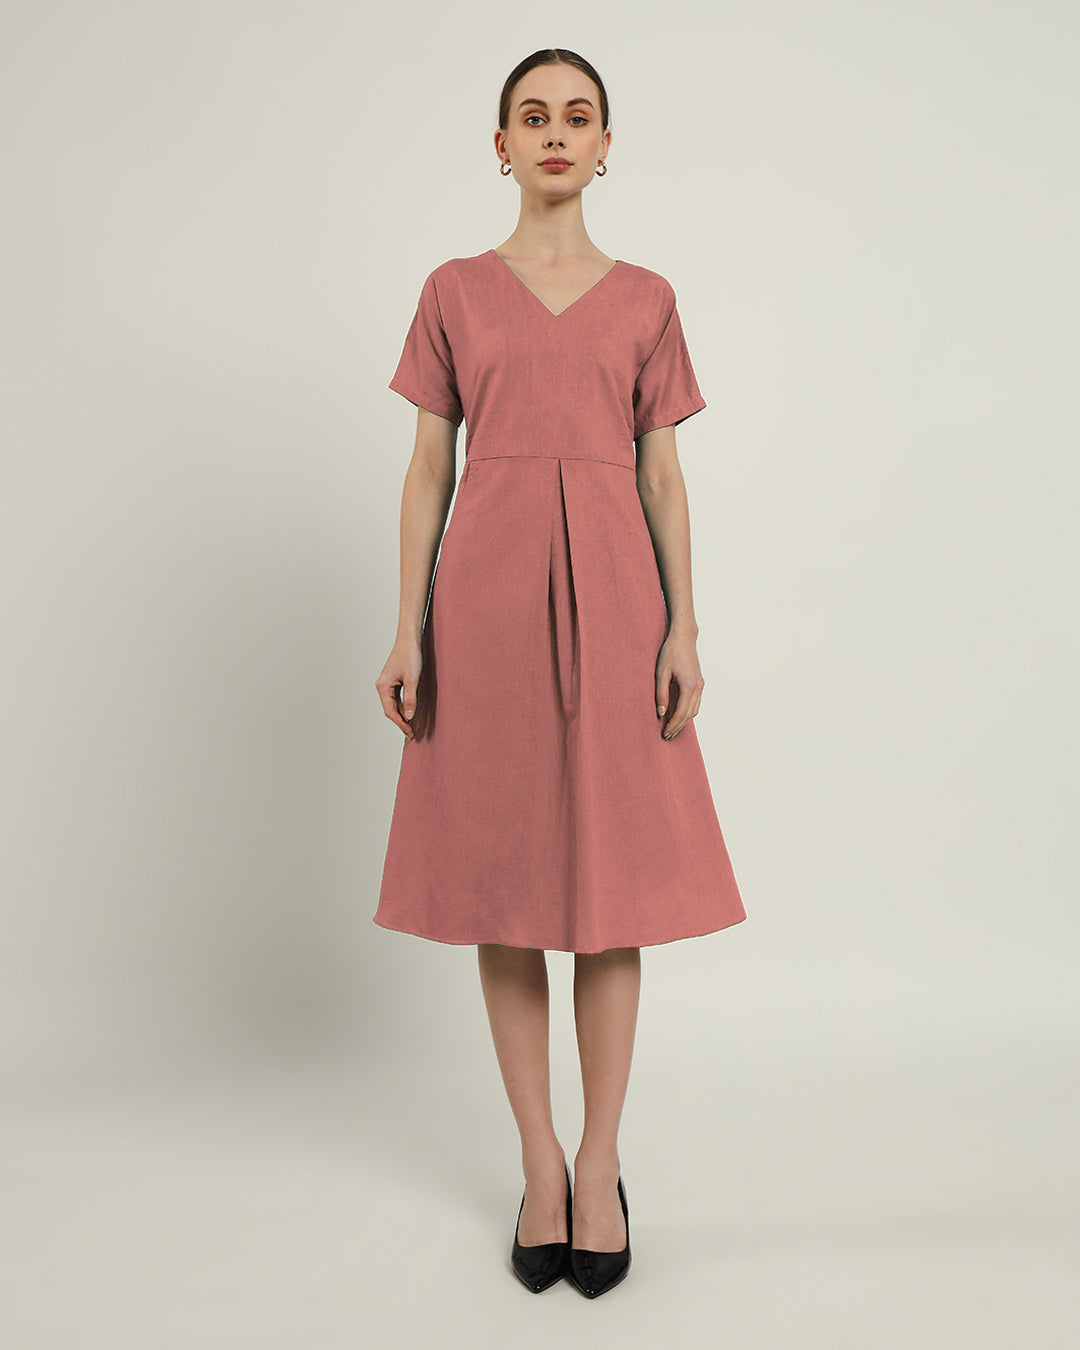 The Memphis Ivory Pink Cotton Dress